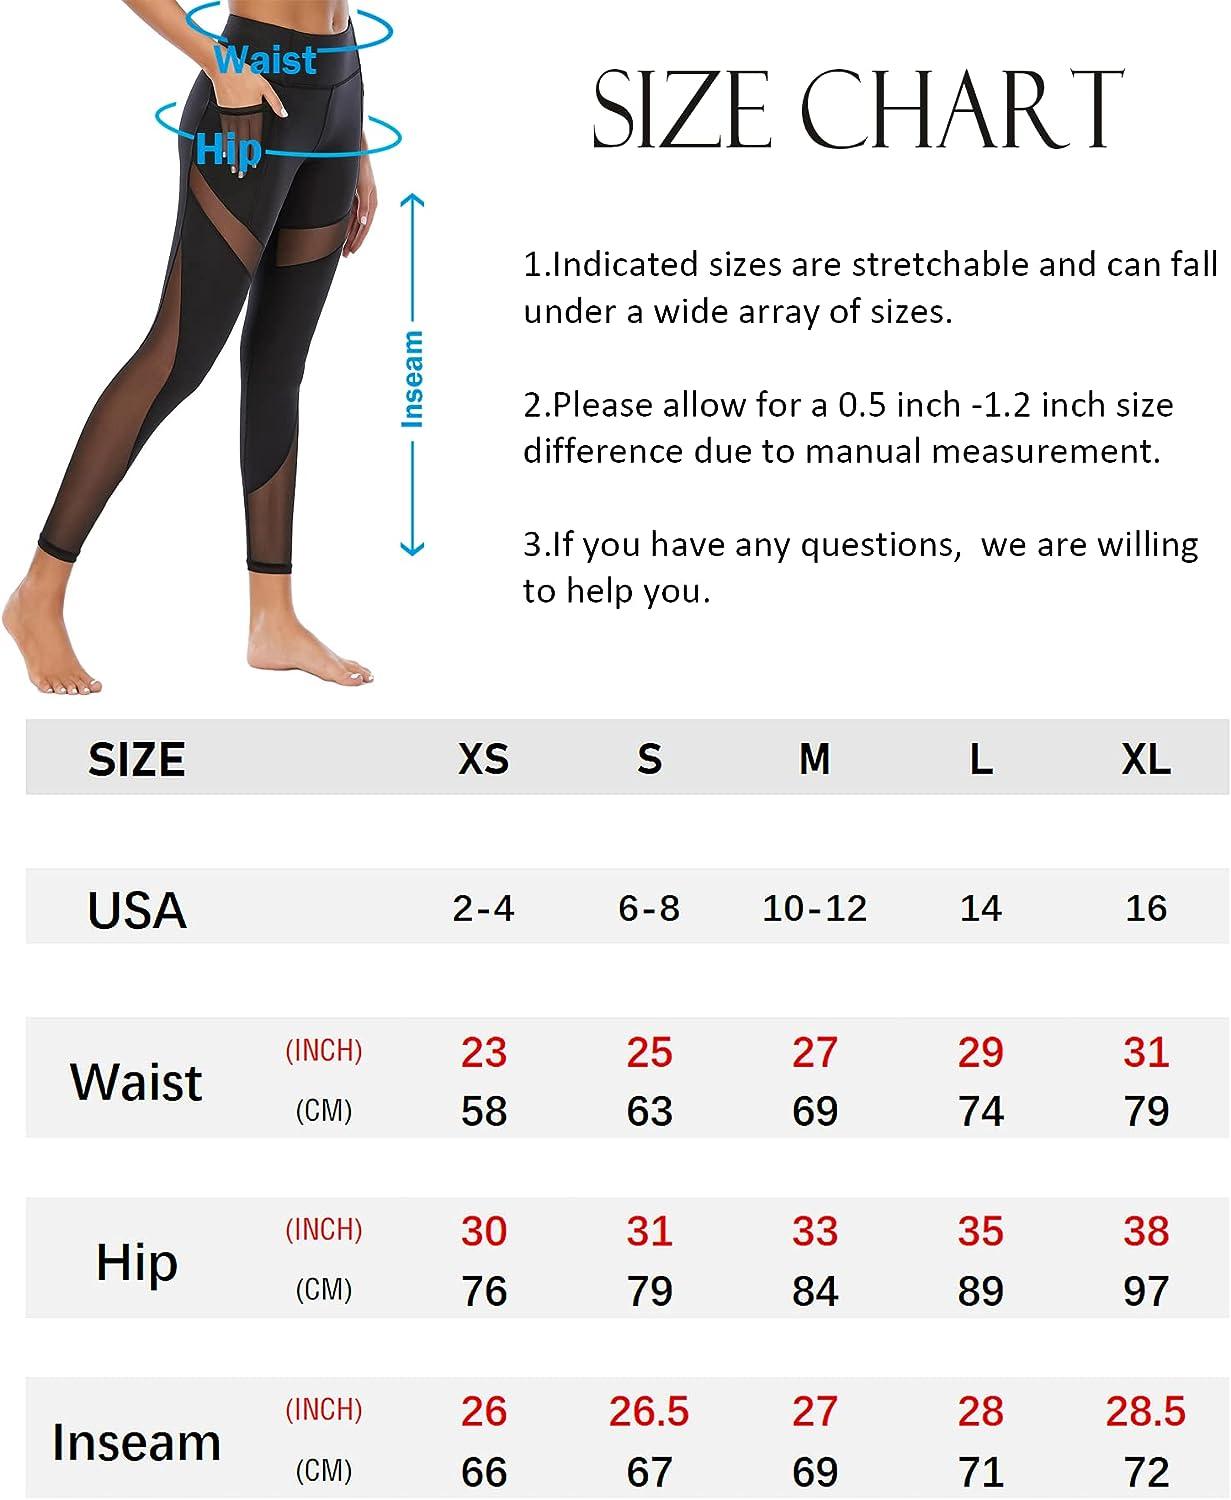 Black mesh side leggings – Rype Curves